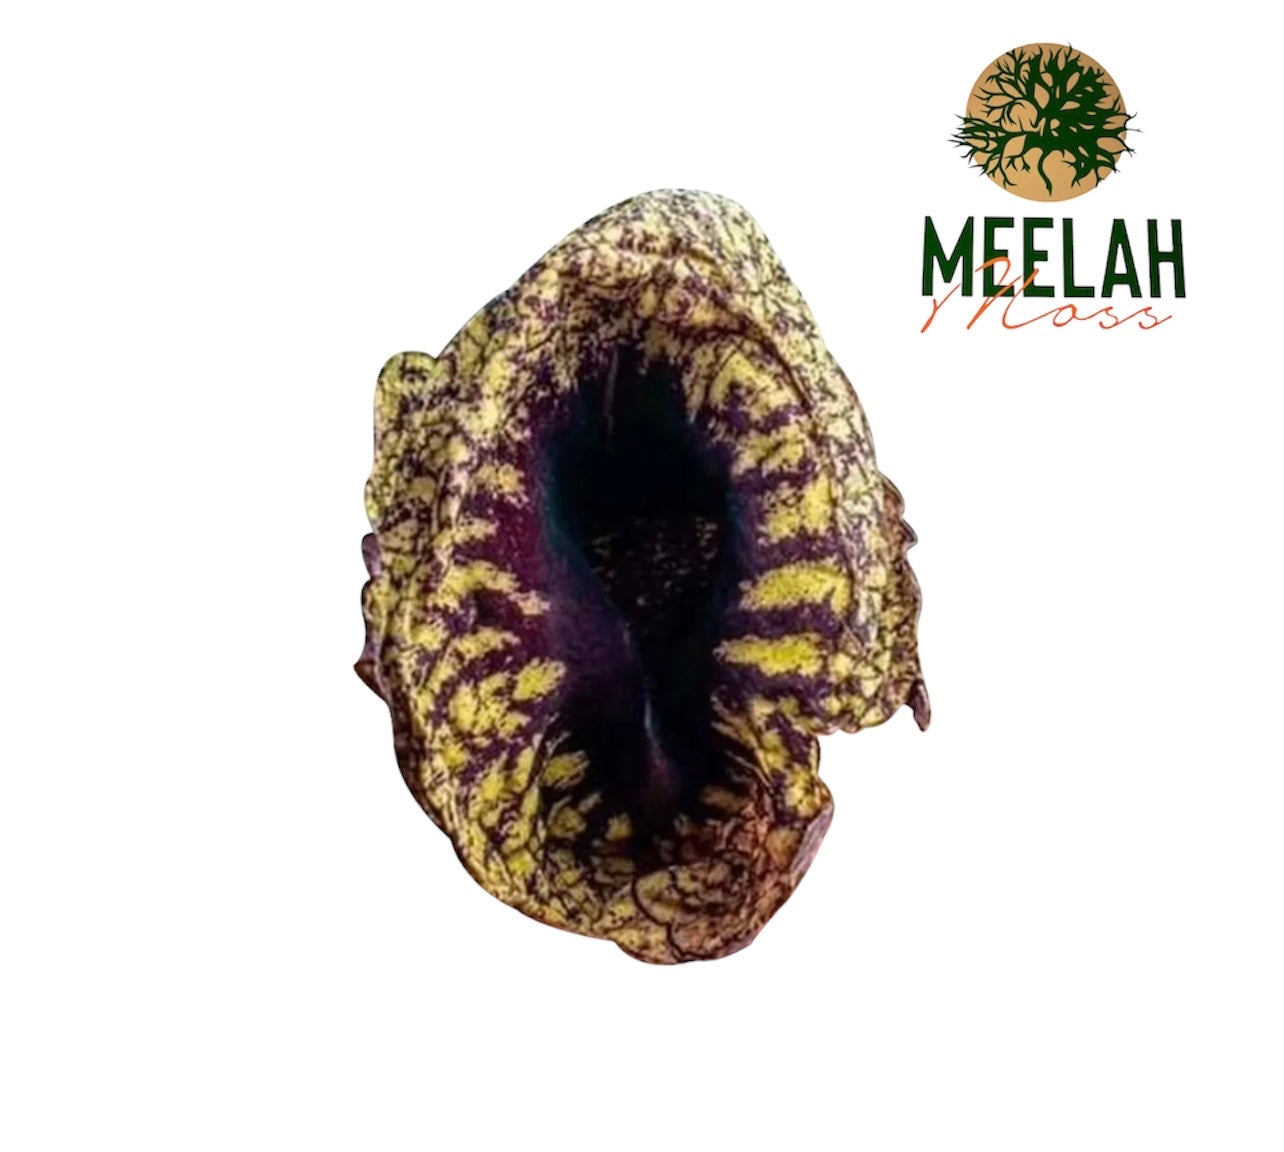 2 DUCK Flower Cleanser – Meelah Moss